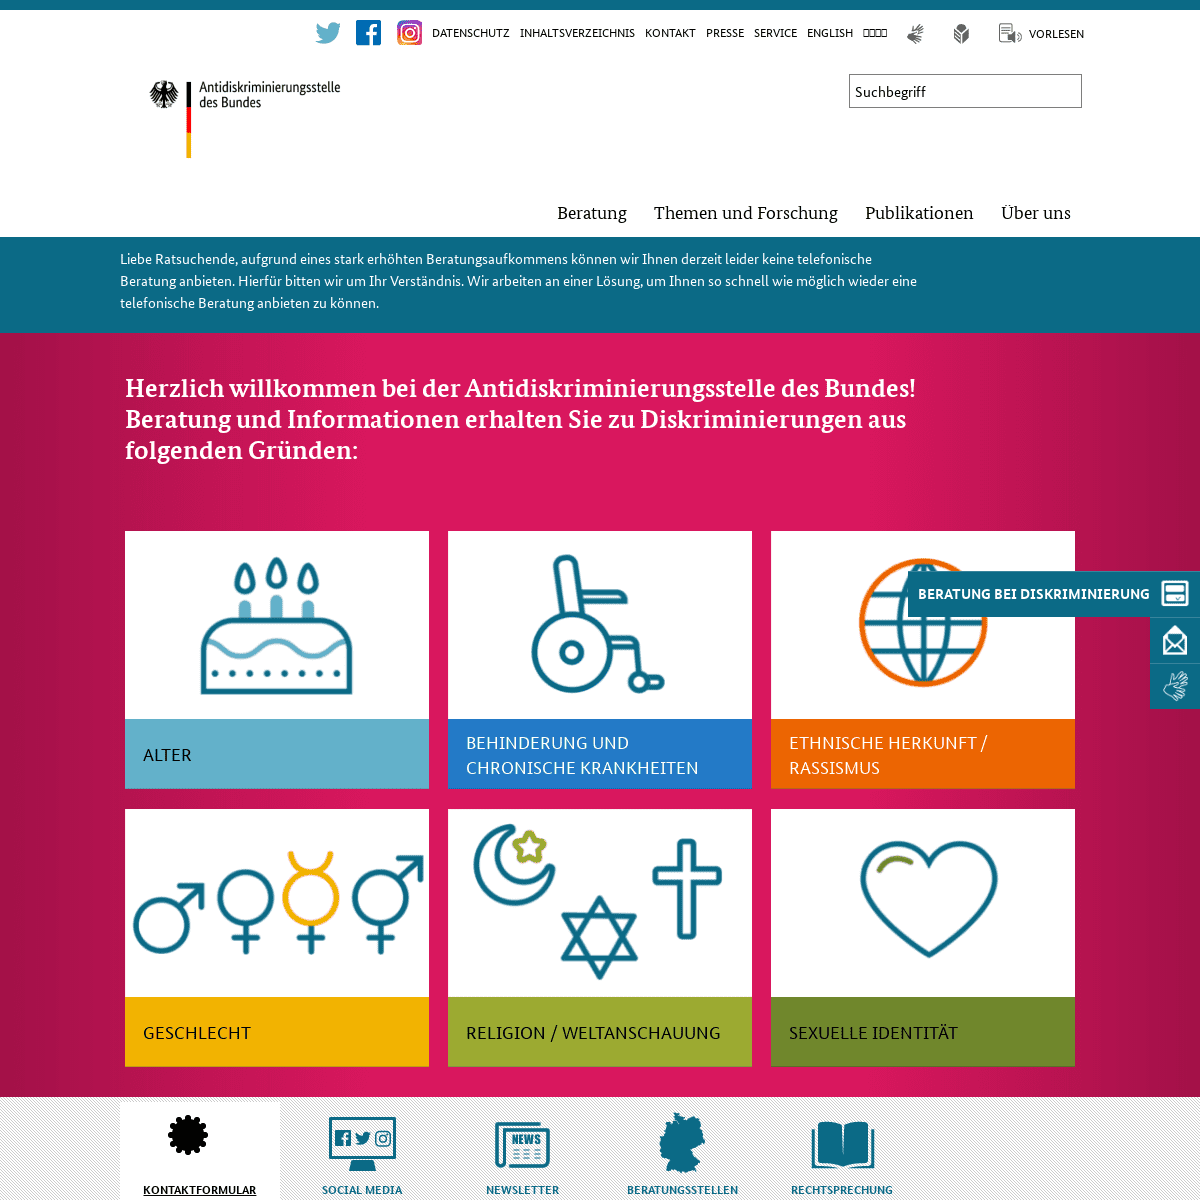 A complete backup of https://antidiskriminierungsstelle.de